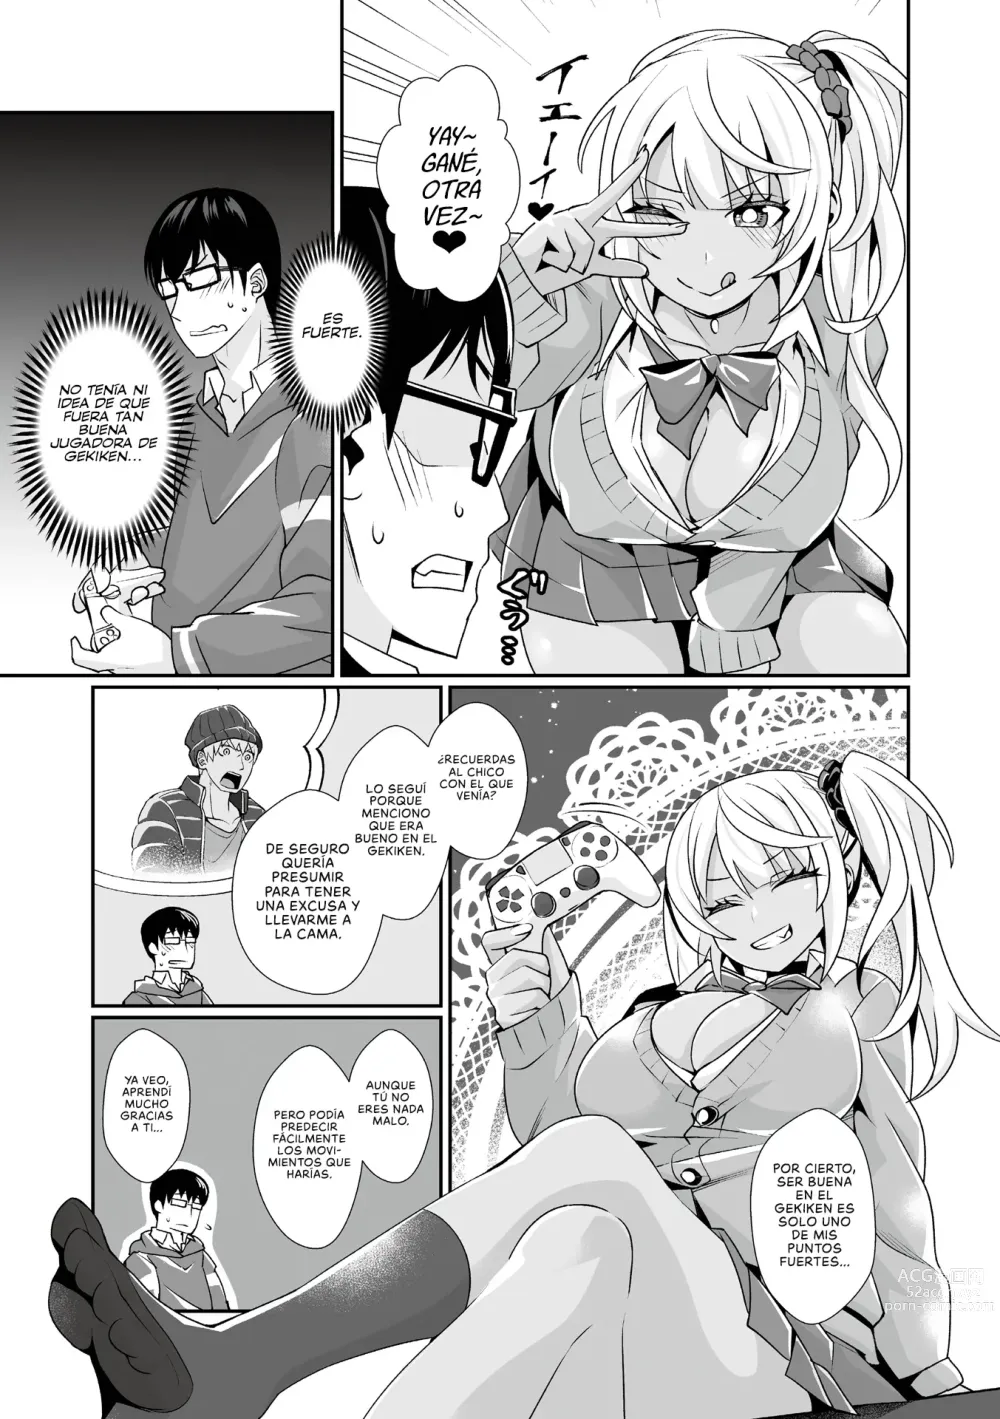 Page 7 of manga Kuro Gal Gamer Encount!